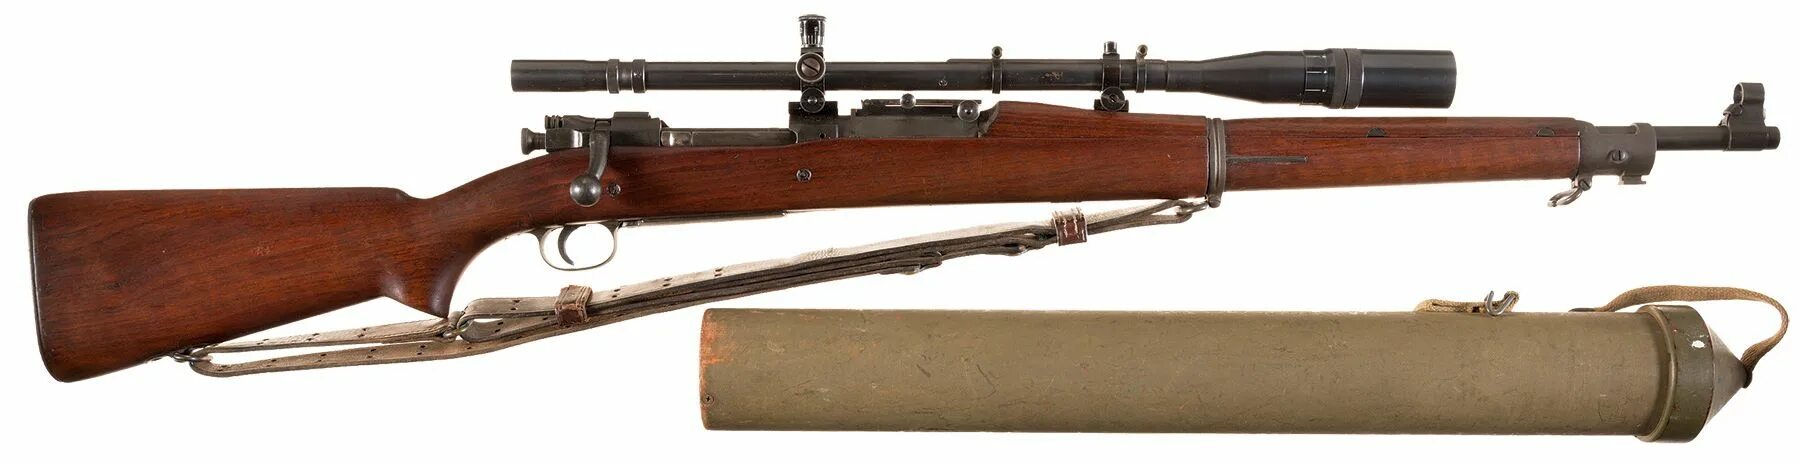 Sniper mark. Винтовка м1а1 Спрингфилд. Springfield m1903a1. Springfield m1903 scope. Springfield m1903 с оптическим прицелом.